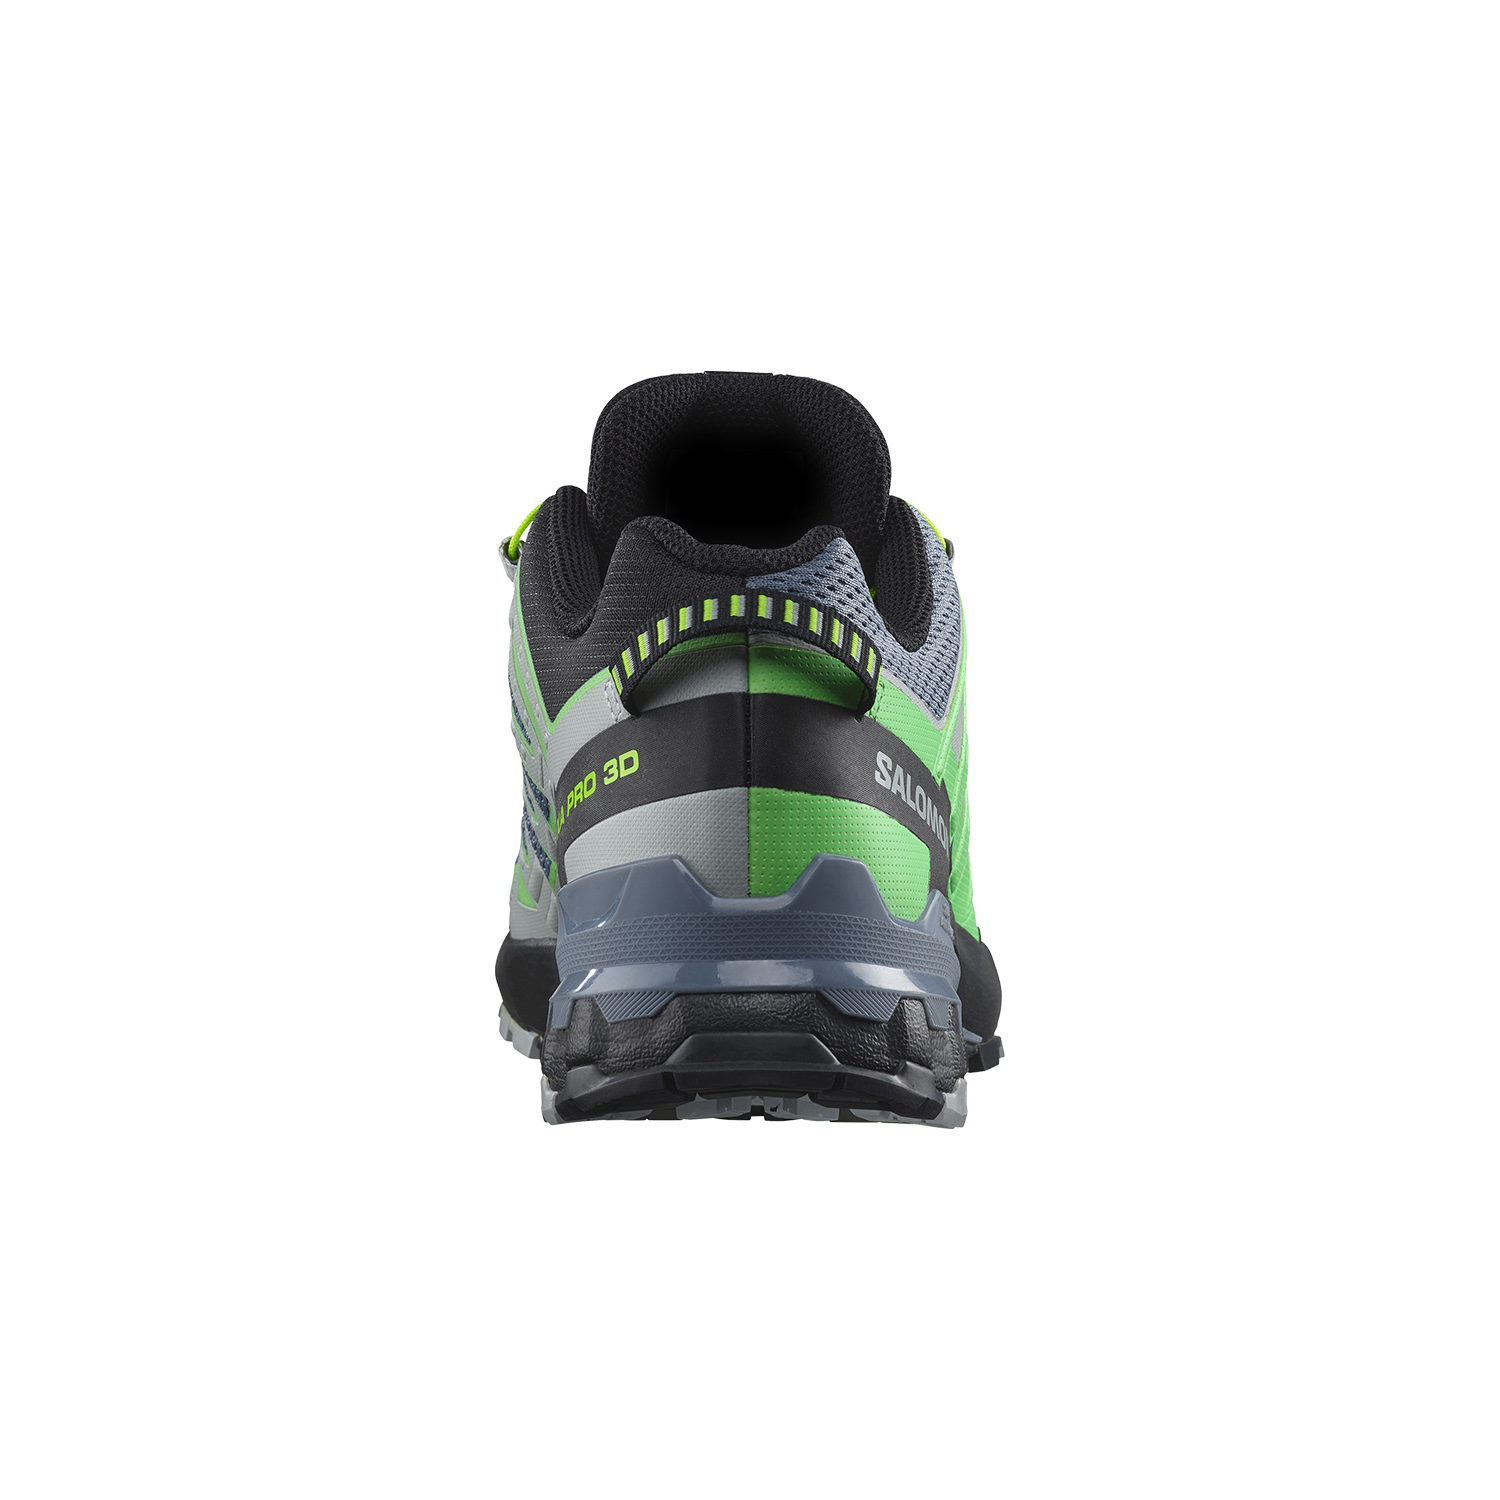 Salomon XA Pro 3D V9 - Flint Stone/Green Gecko/Black